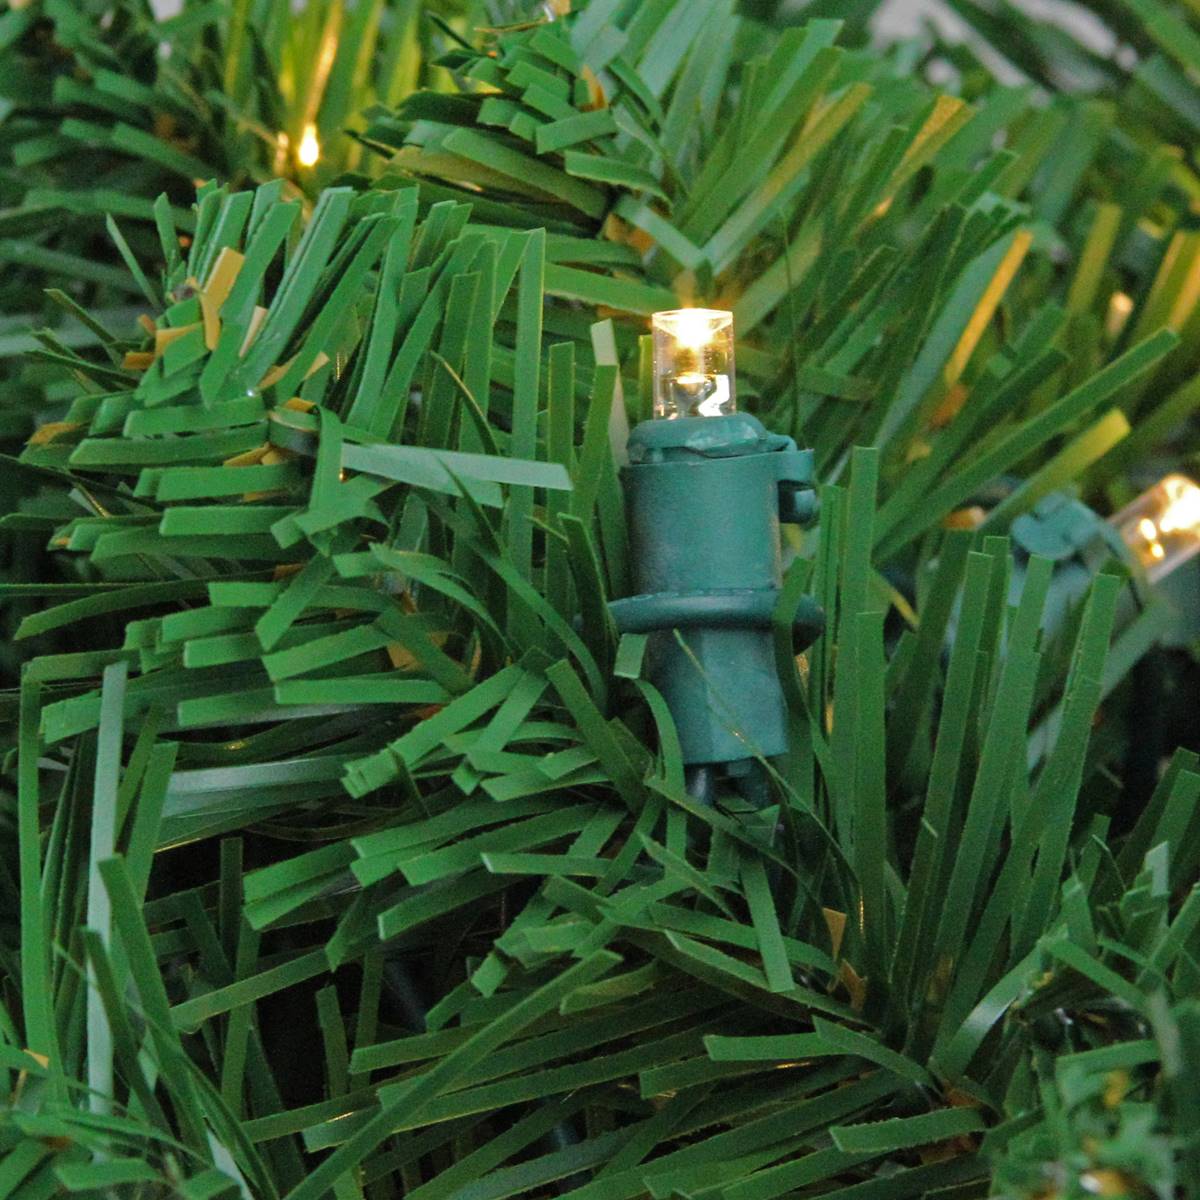 Northlight Seasonal 36in. Pine Artificial Christmas Column Swag